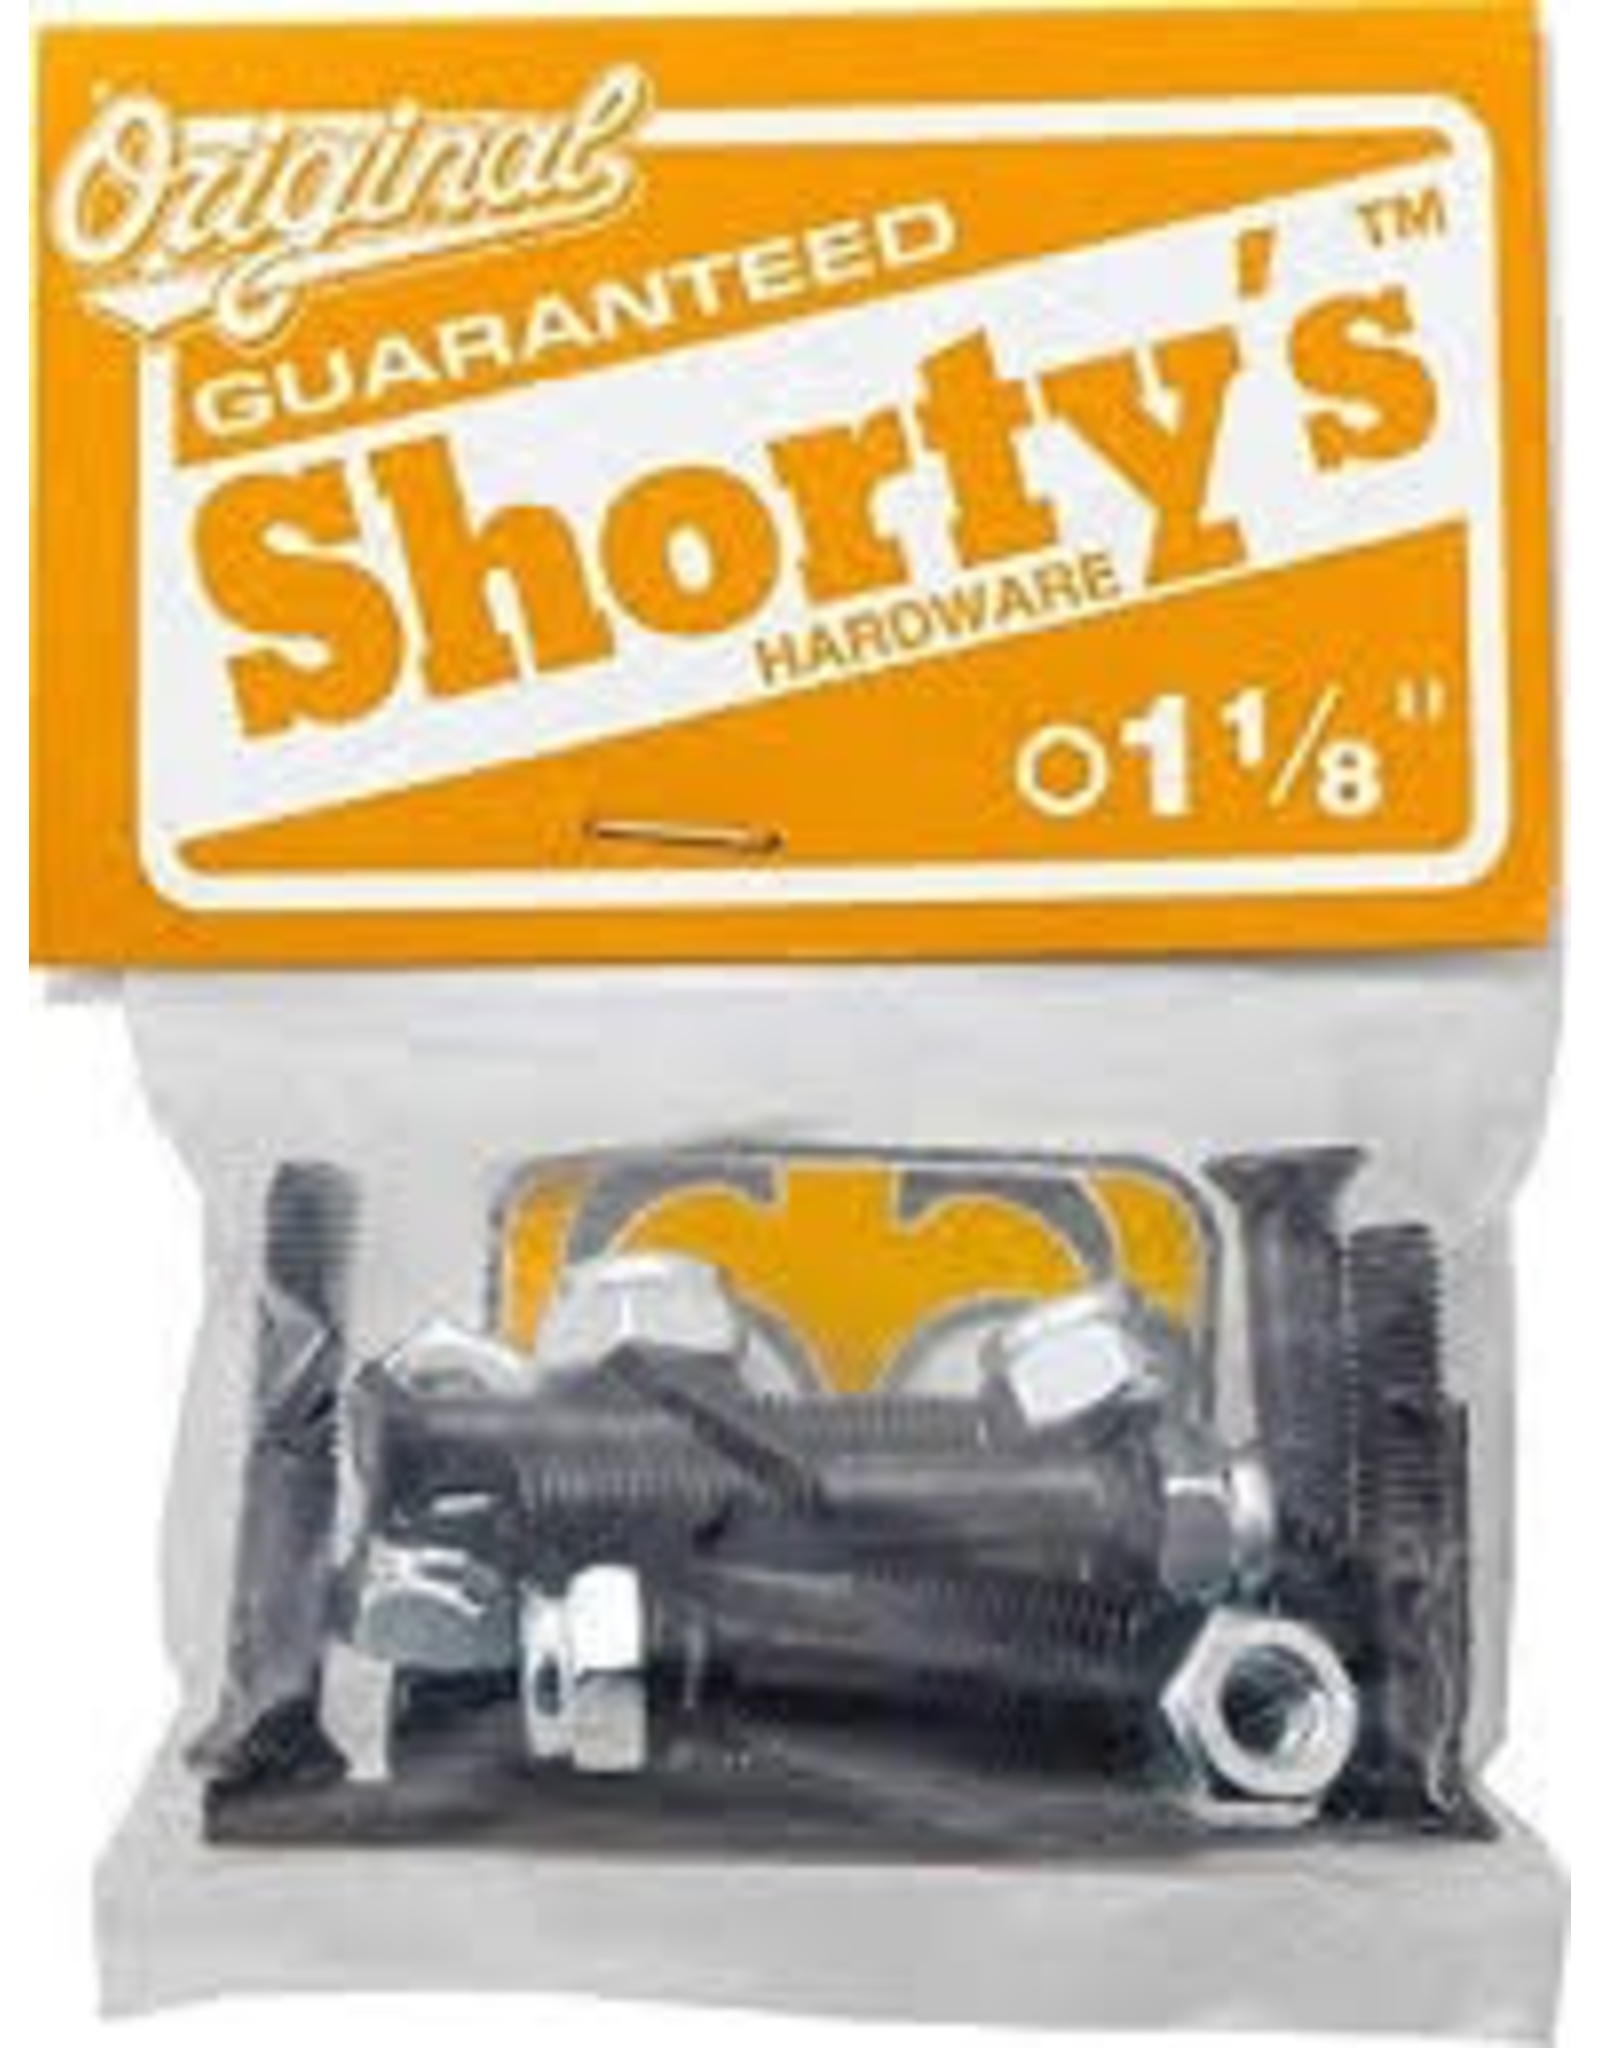 SHORTY'S SHORTYS SILVERADOS 1-1/8" PH 10/BOX HARDWARE